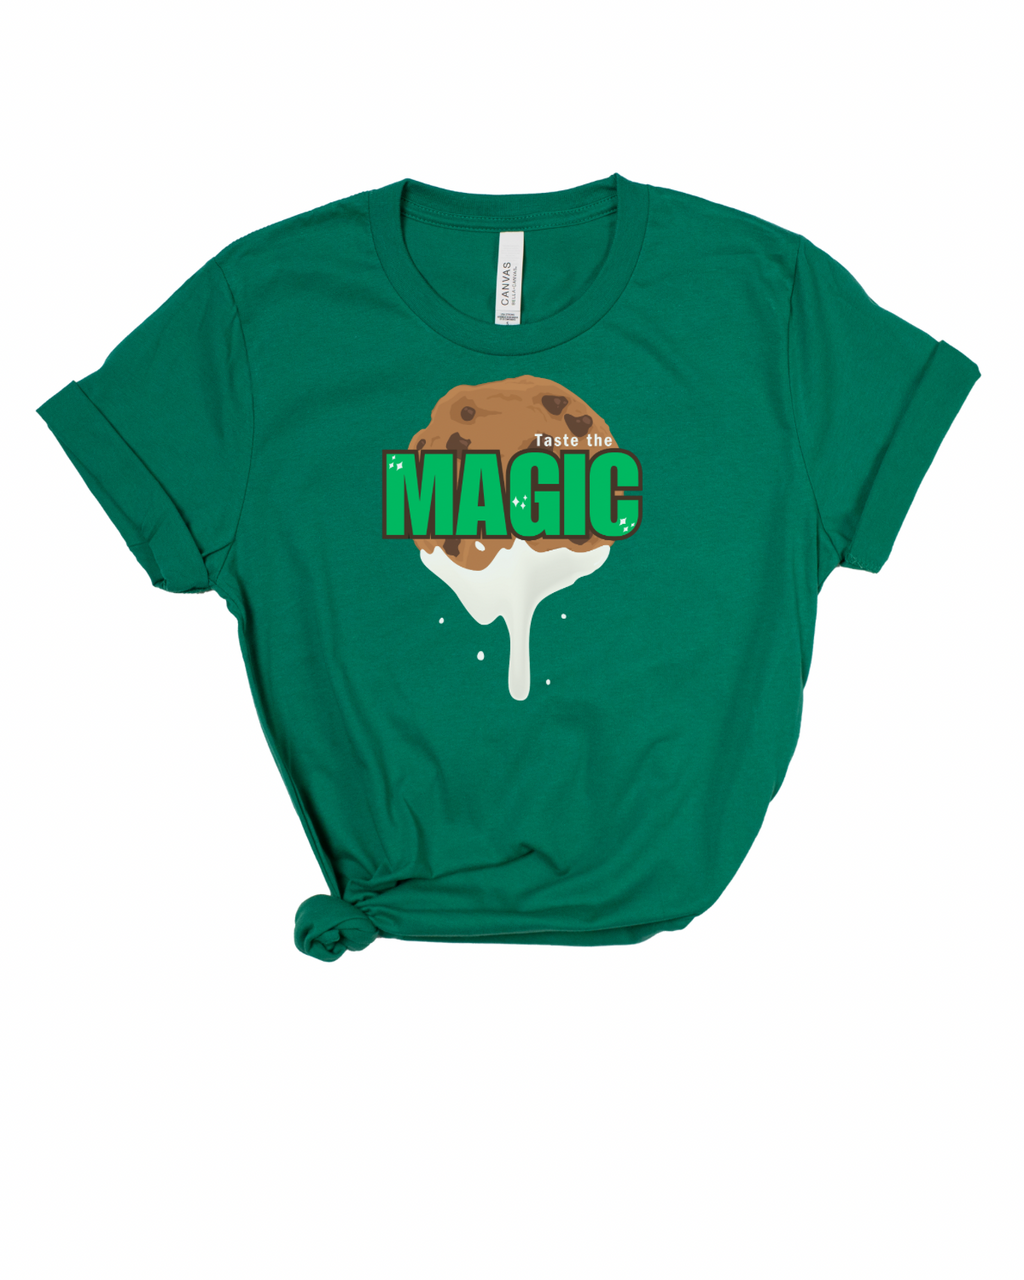 Taste the Magic T-shirt